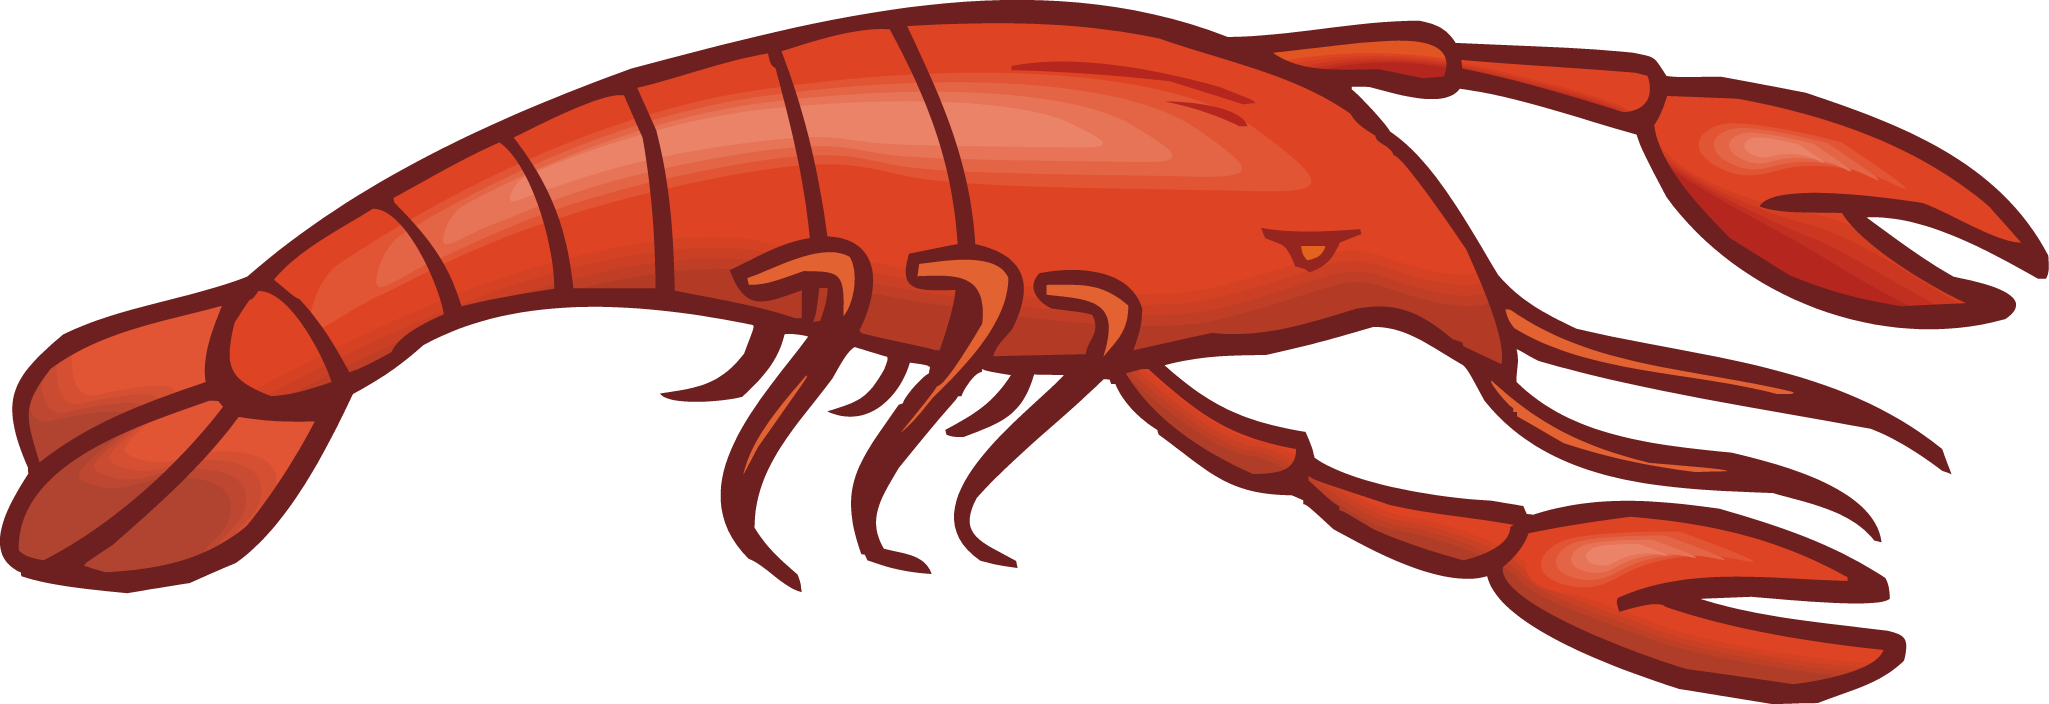 Crayfish Cartoon Illustration